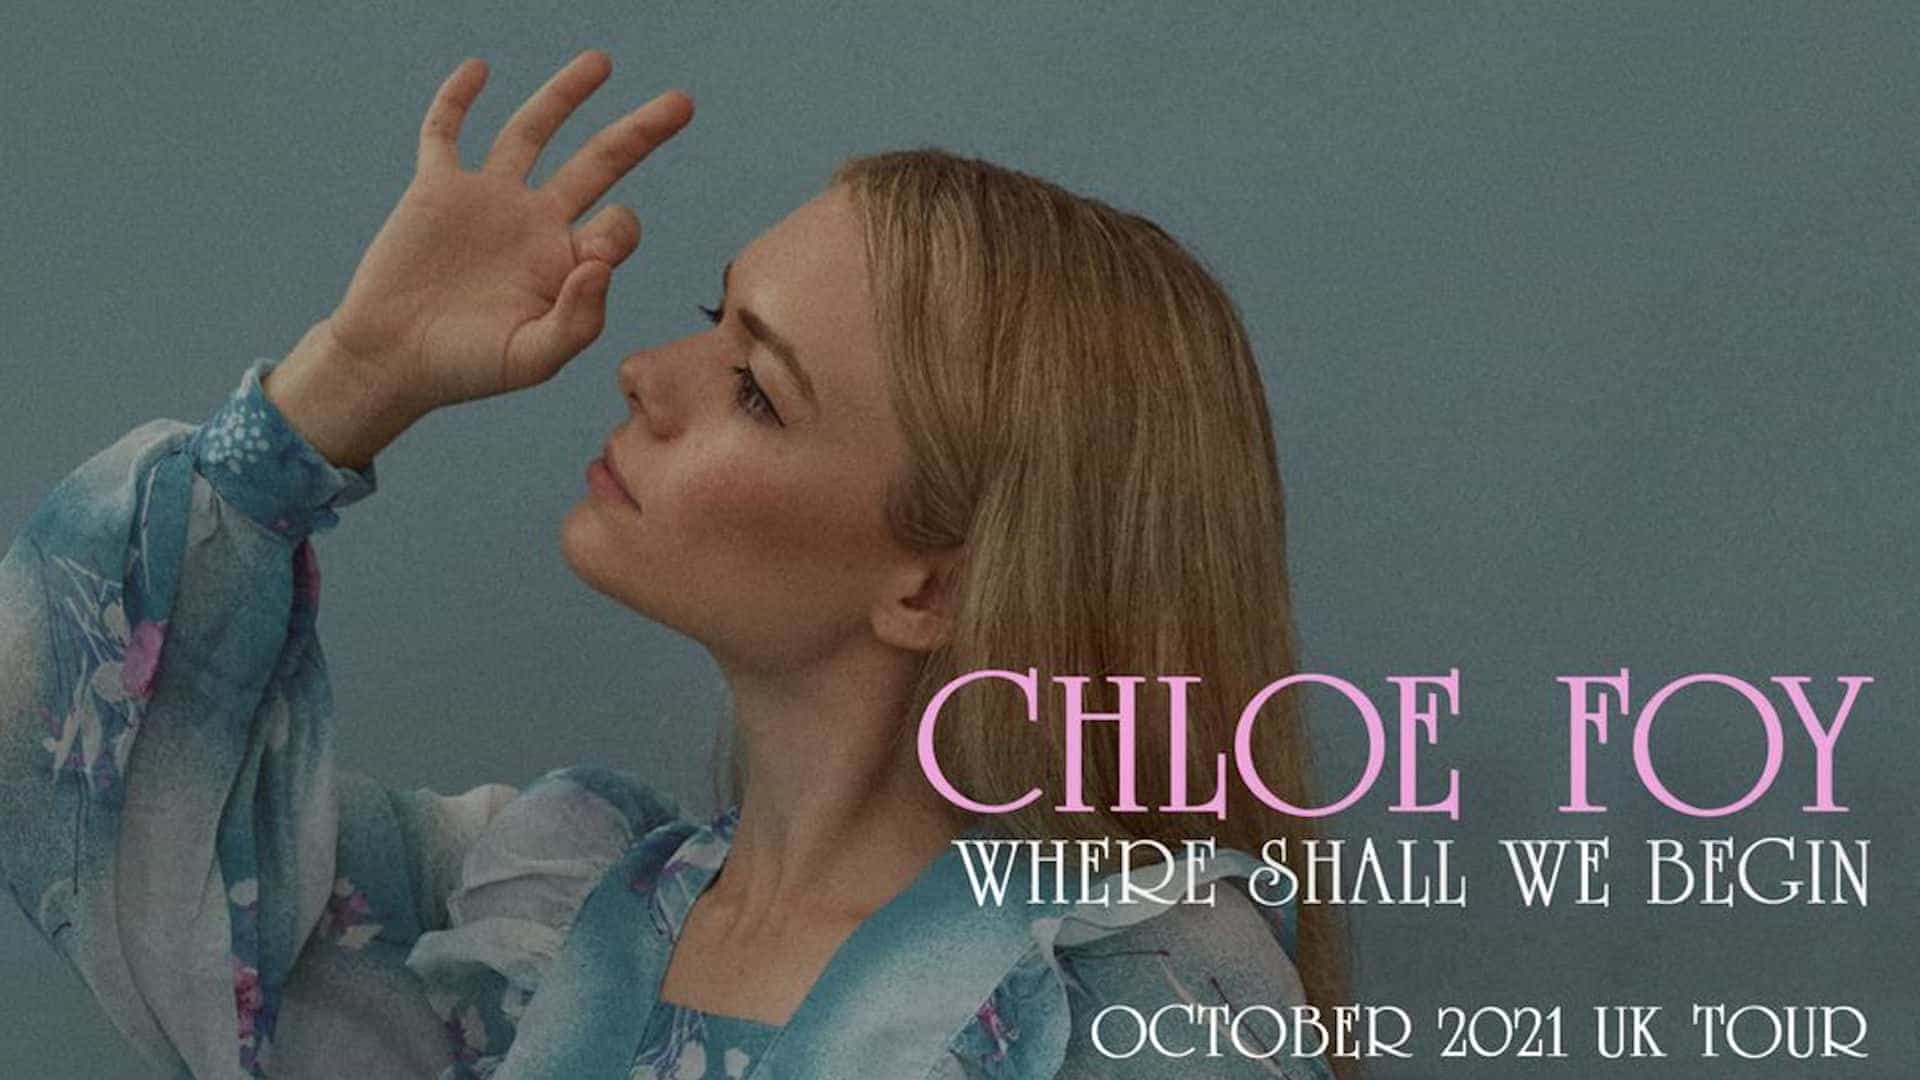 Chloe Foy